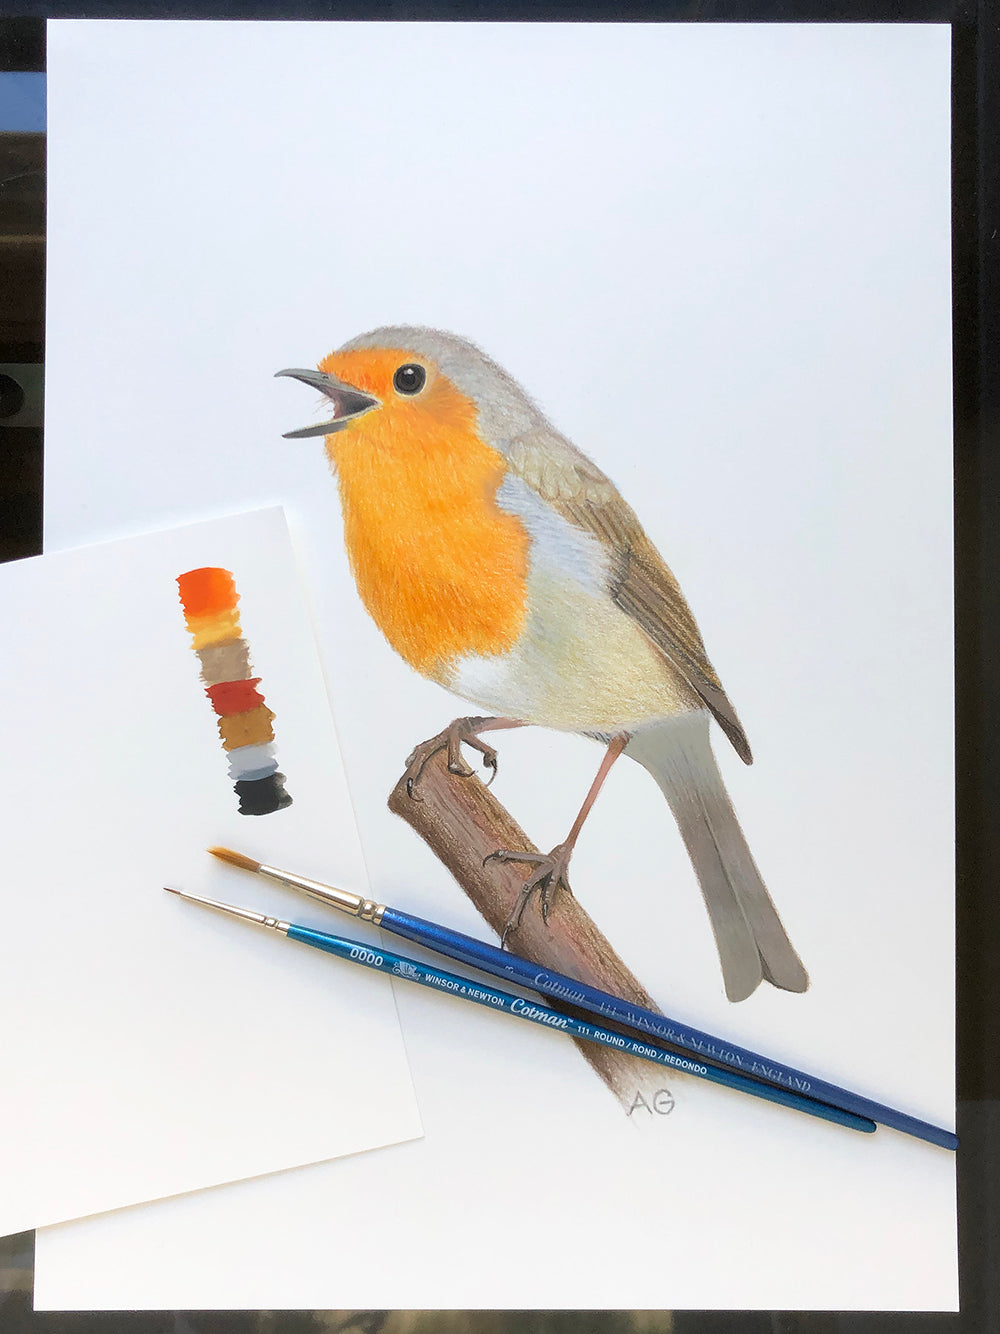 Painting of a European robin by Amanda Gosse